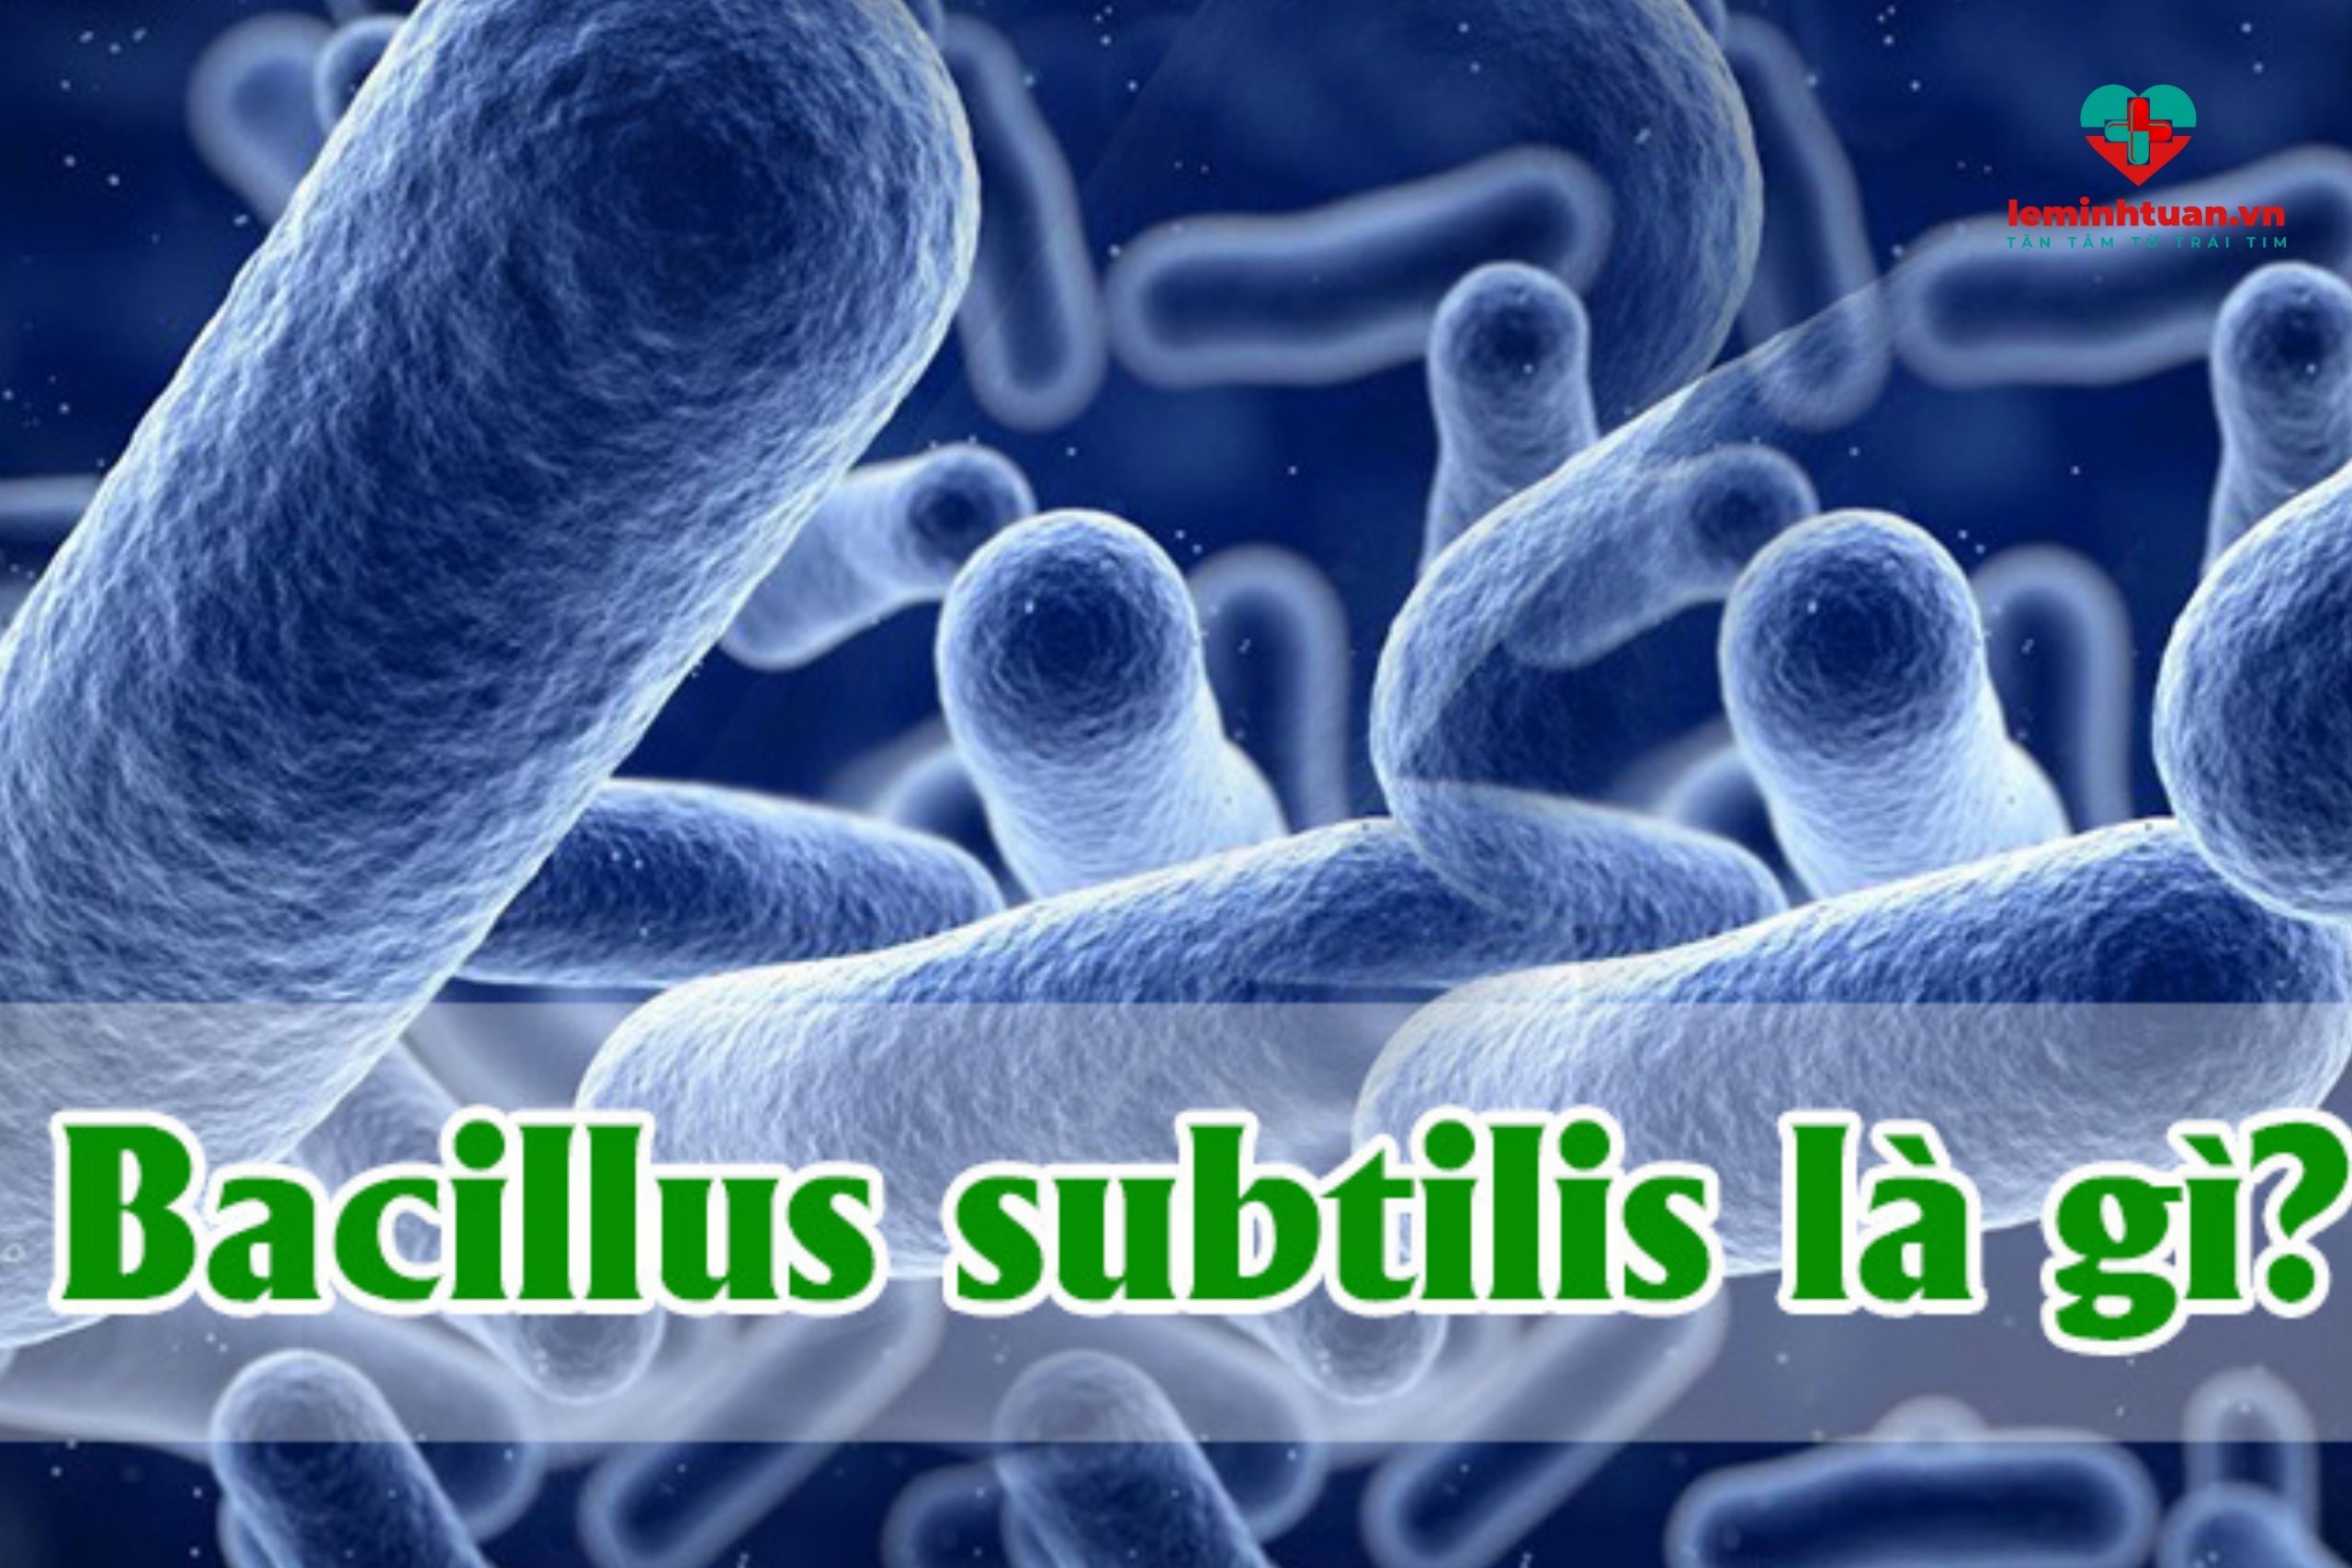 Thuốc Bacillus subtilis là gì?